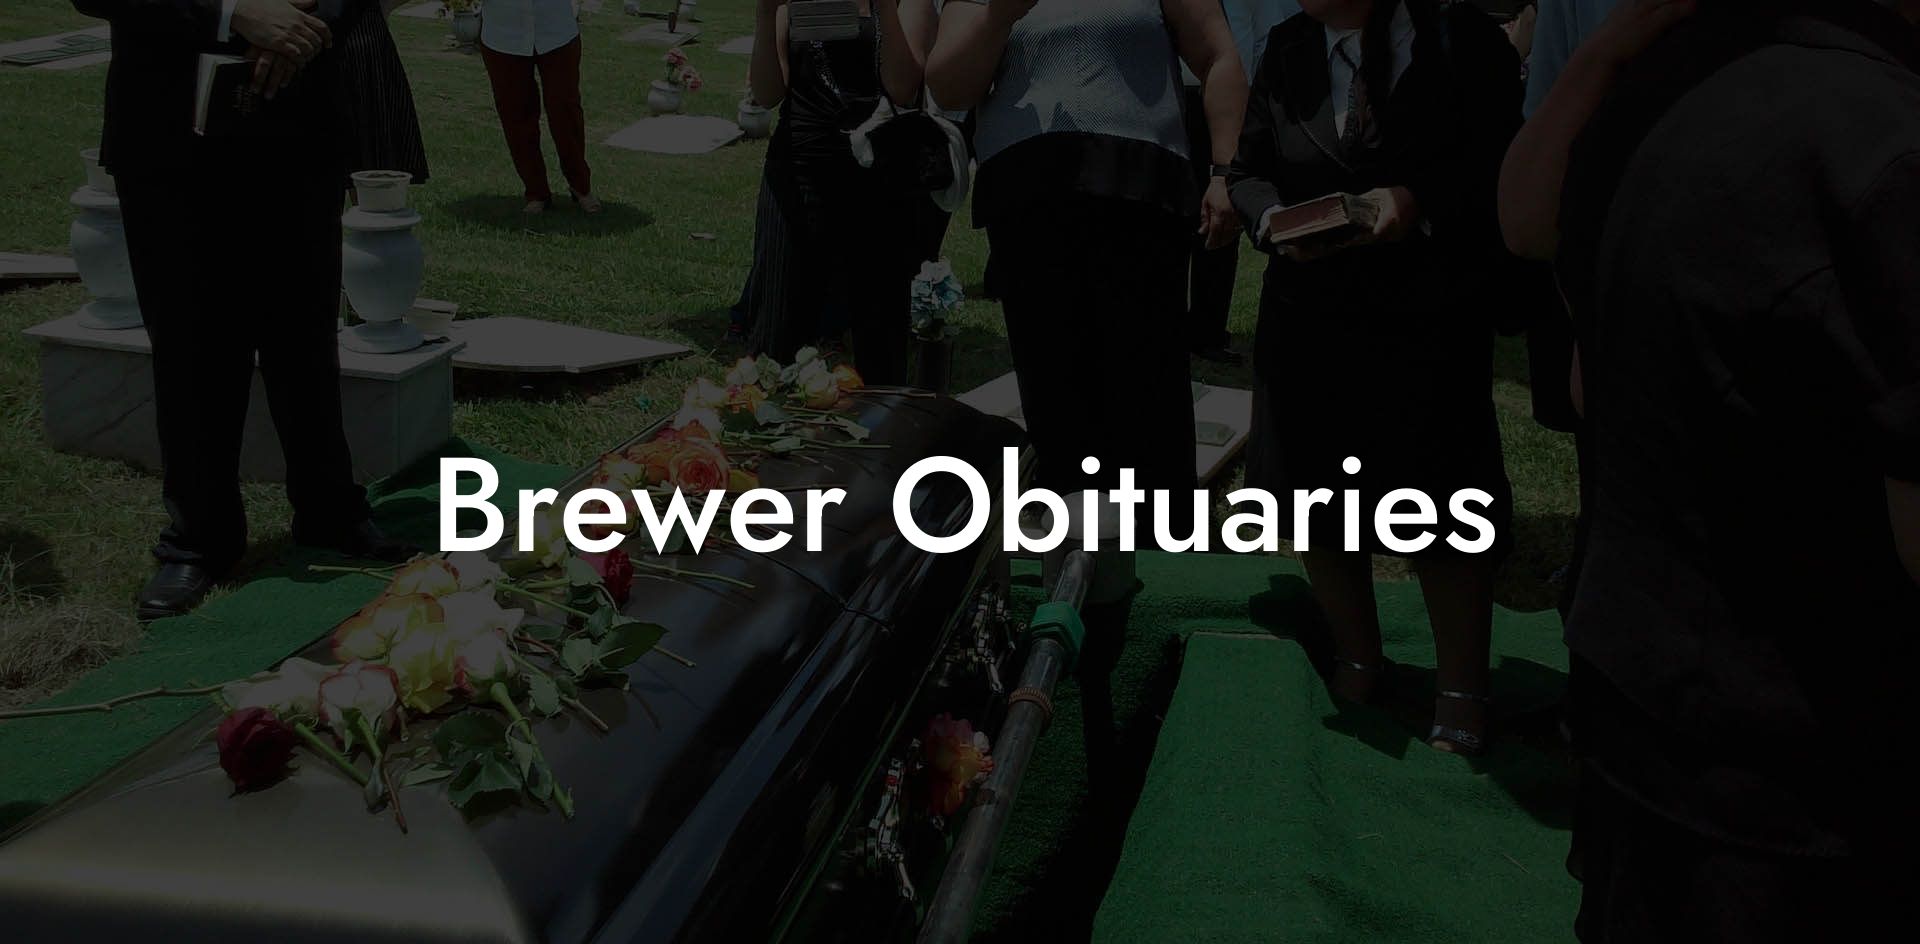 Brewer Obituaries